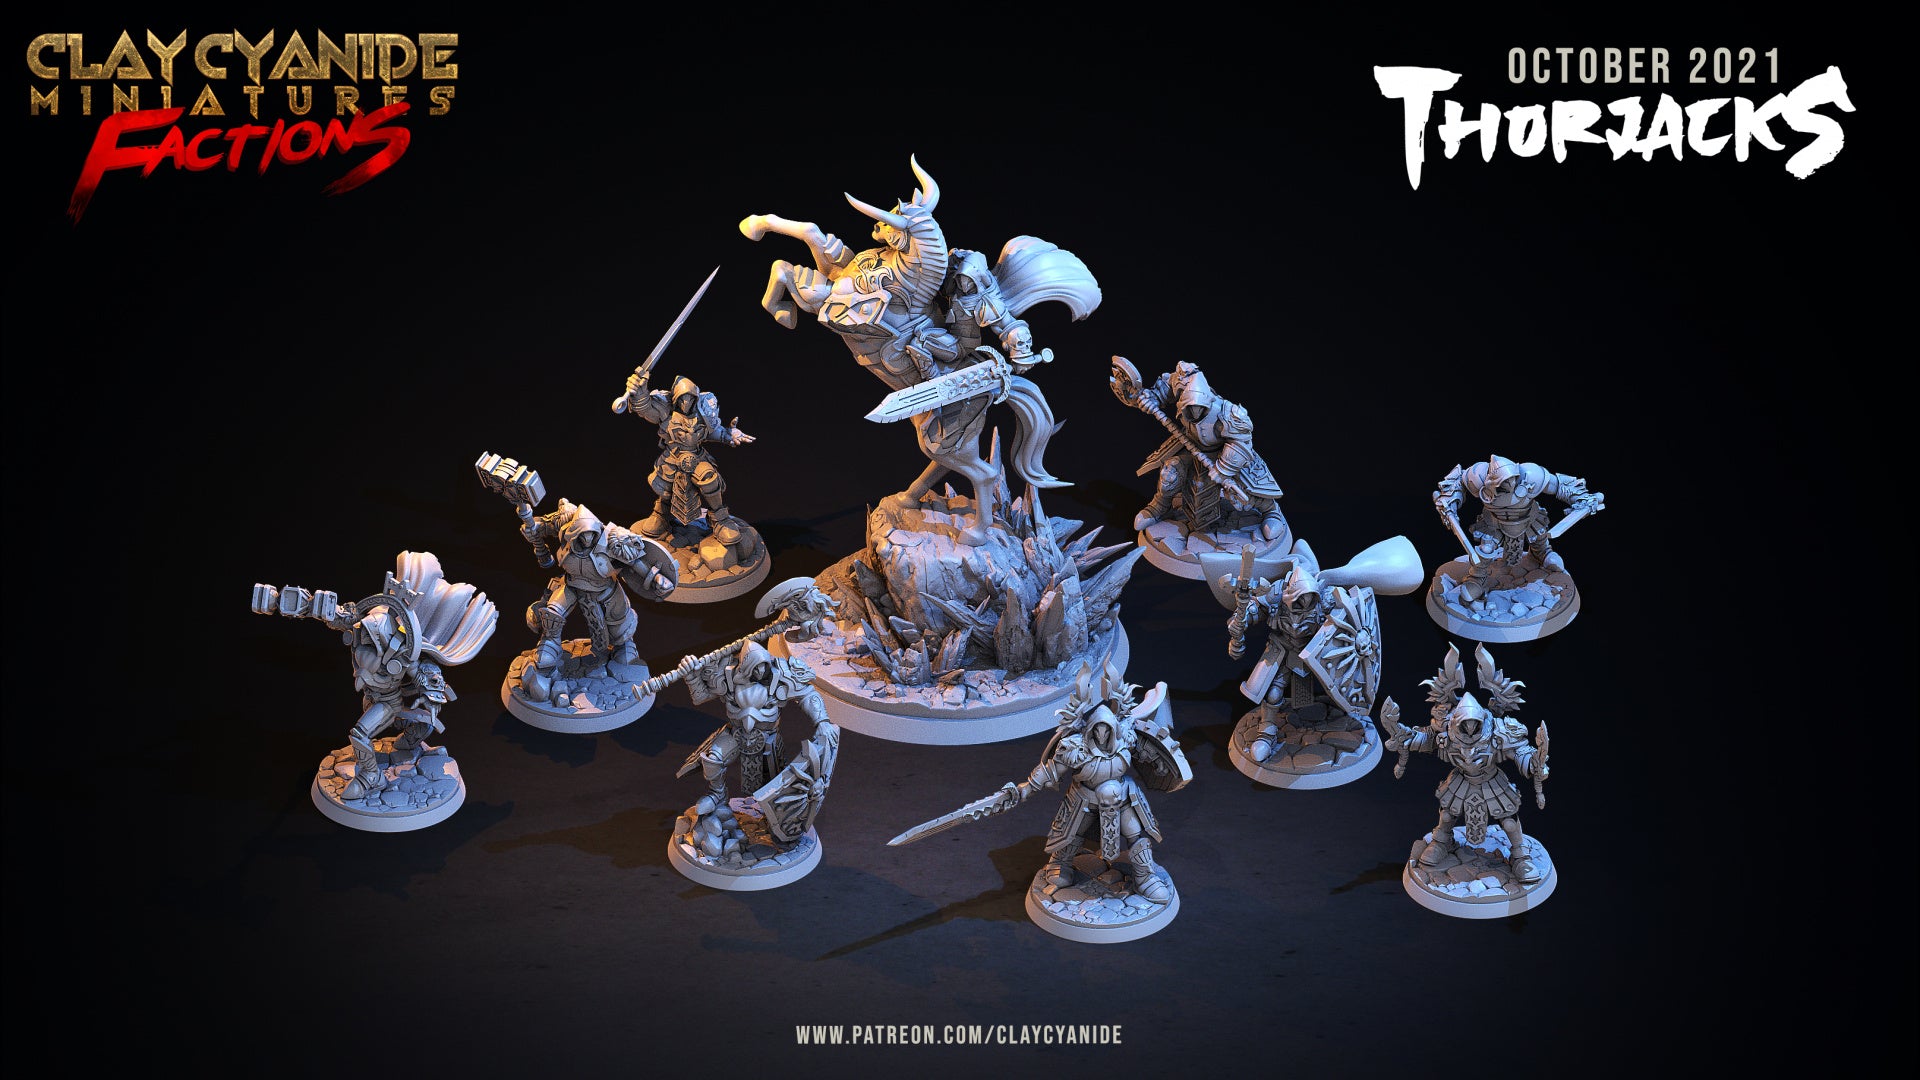 Thorjacks Collection